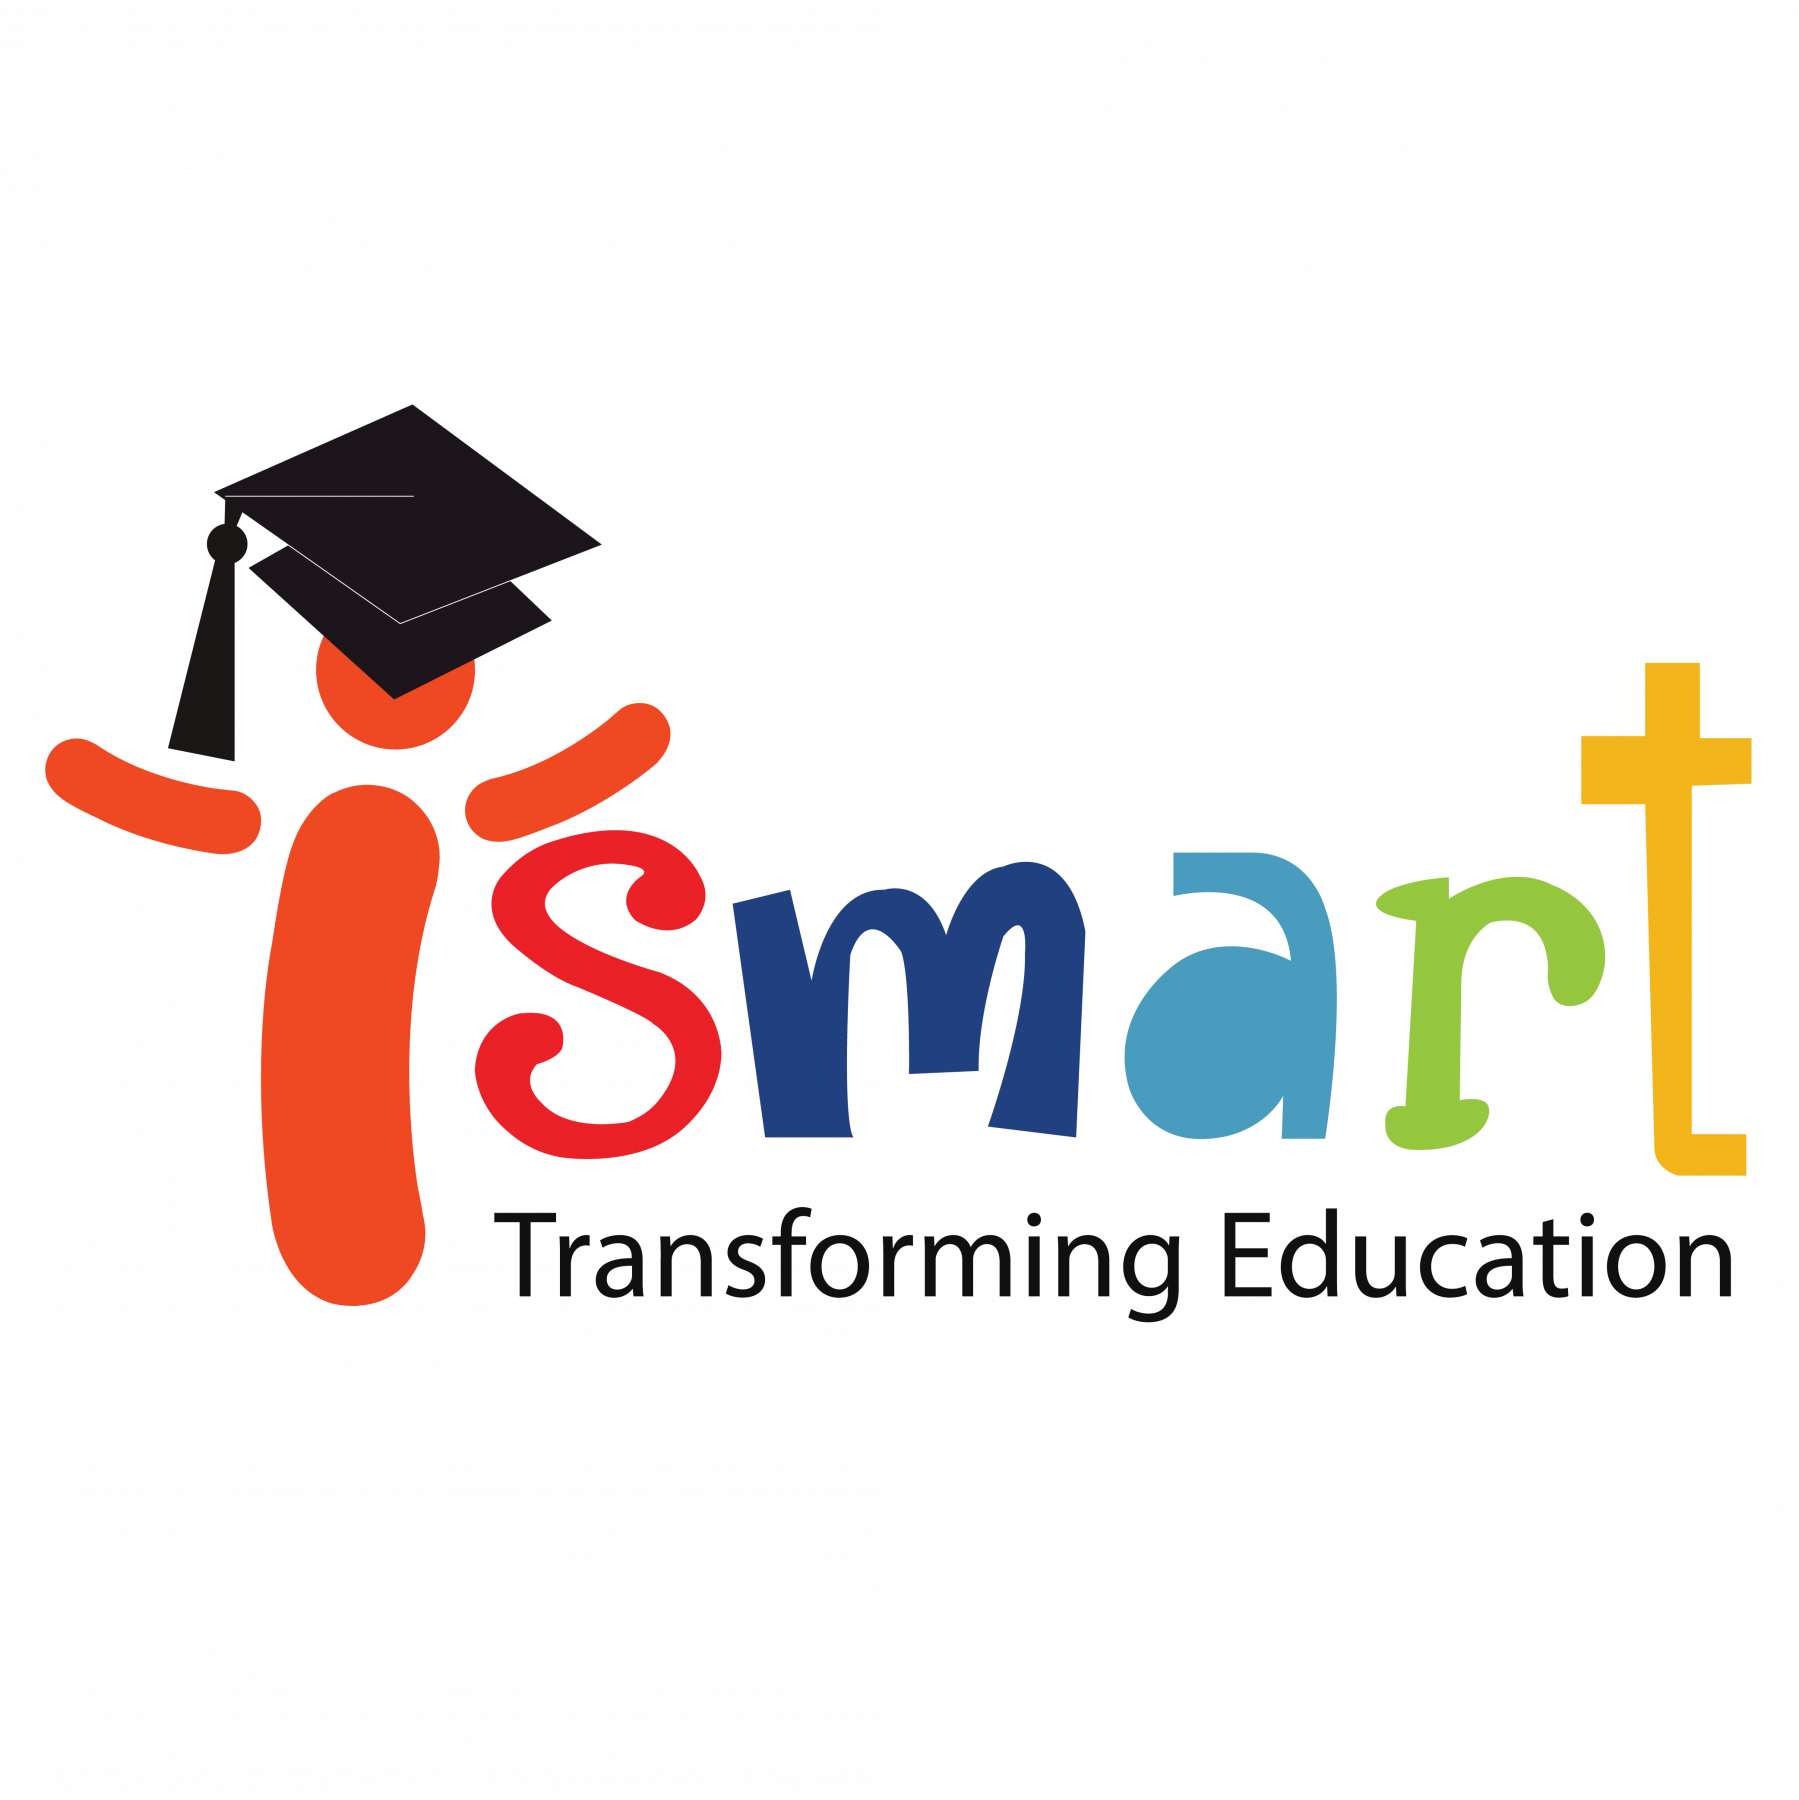 iSMART Education